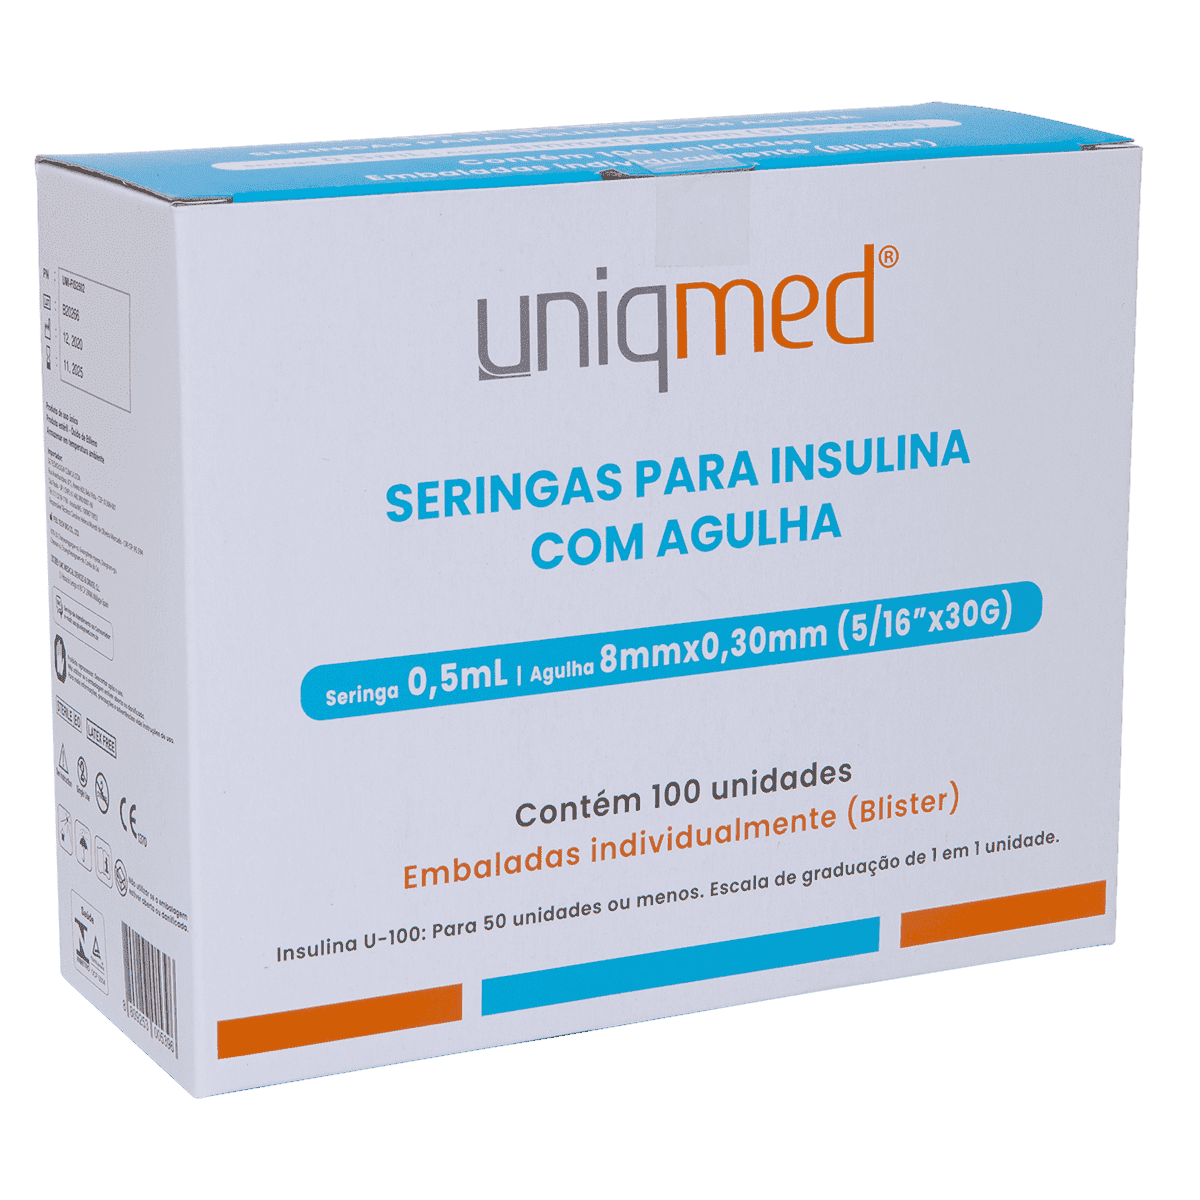 Seringas para Insulina Uniqmed 0.5mL Agulha 8mmx0.30mm - Caixa com 100 unidades (Blister individual)